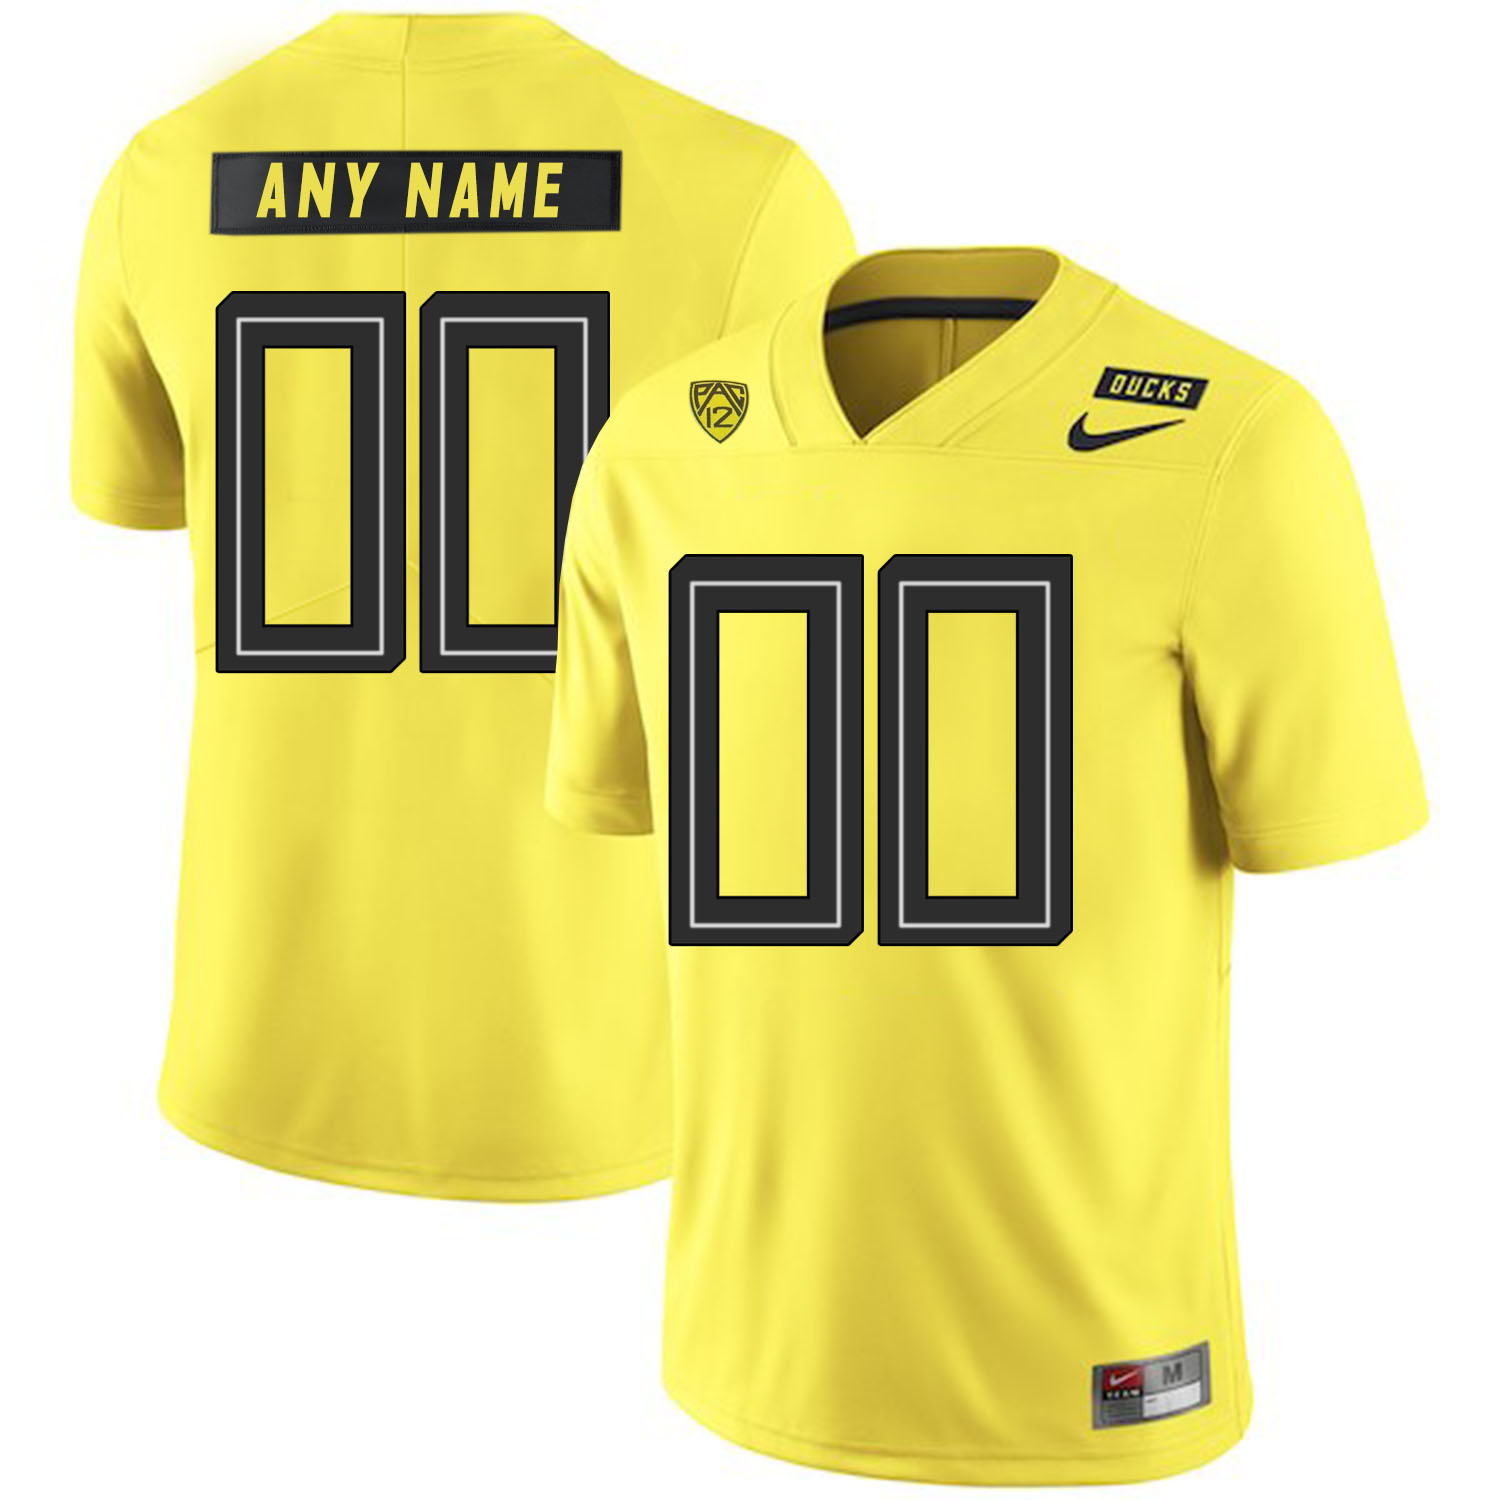 Oregon Ducks Yellow Men's Customized Nike College Football Jersey